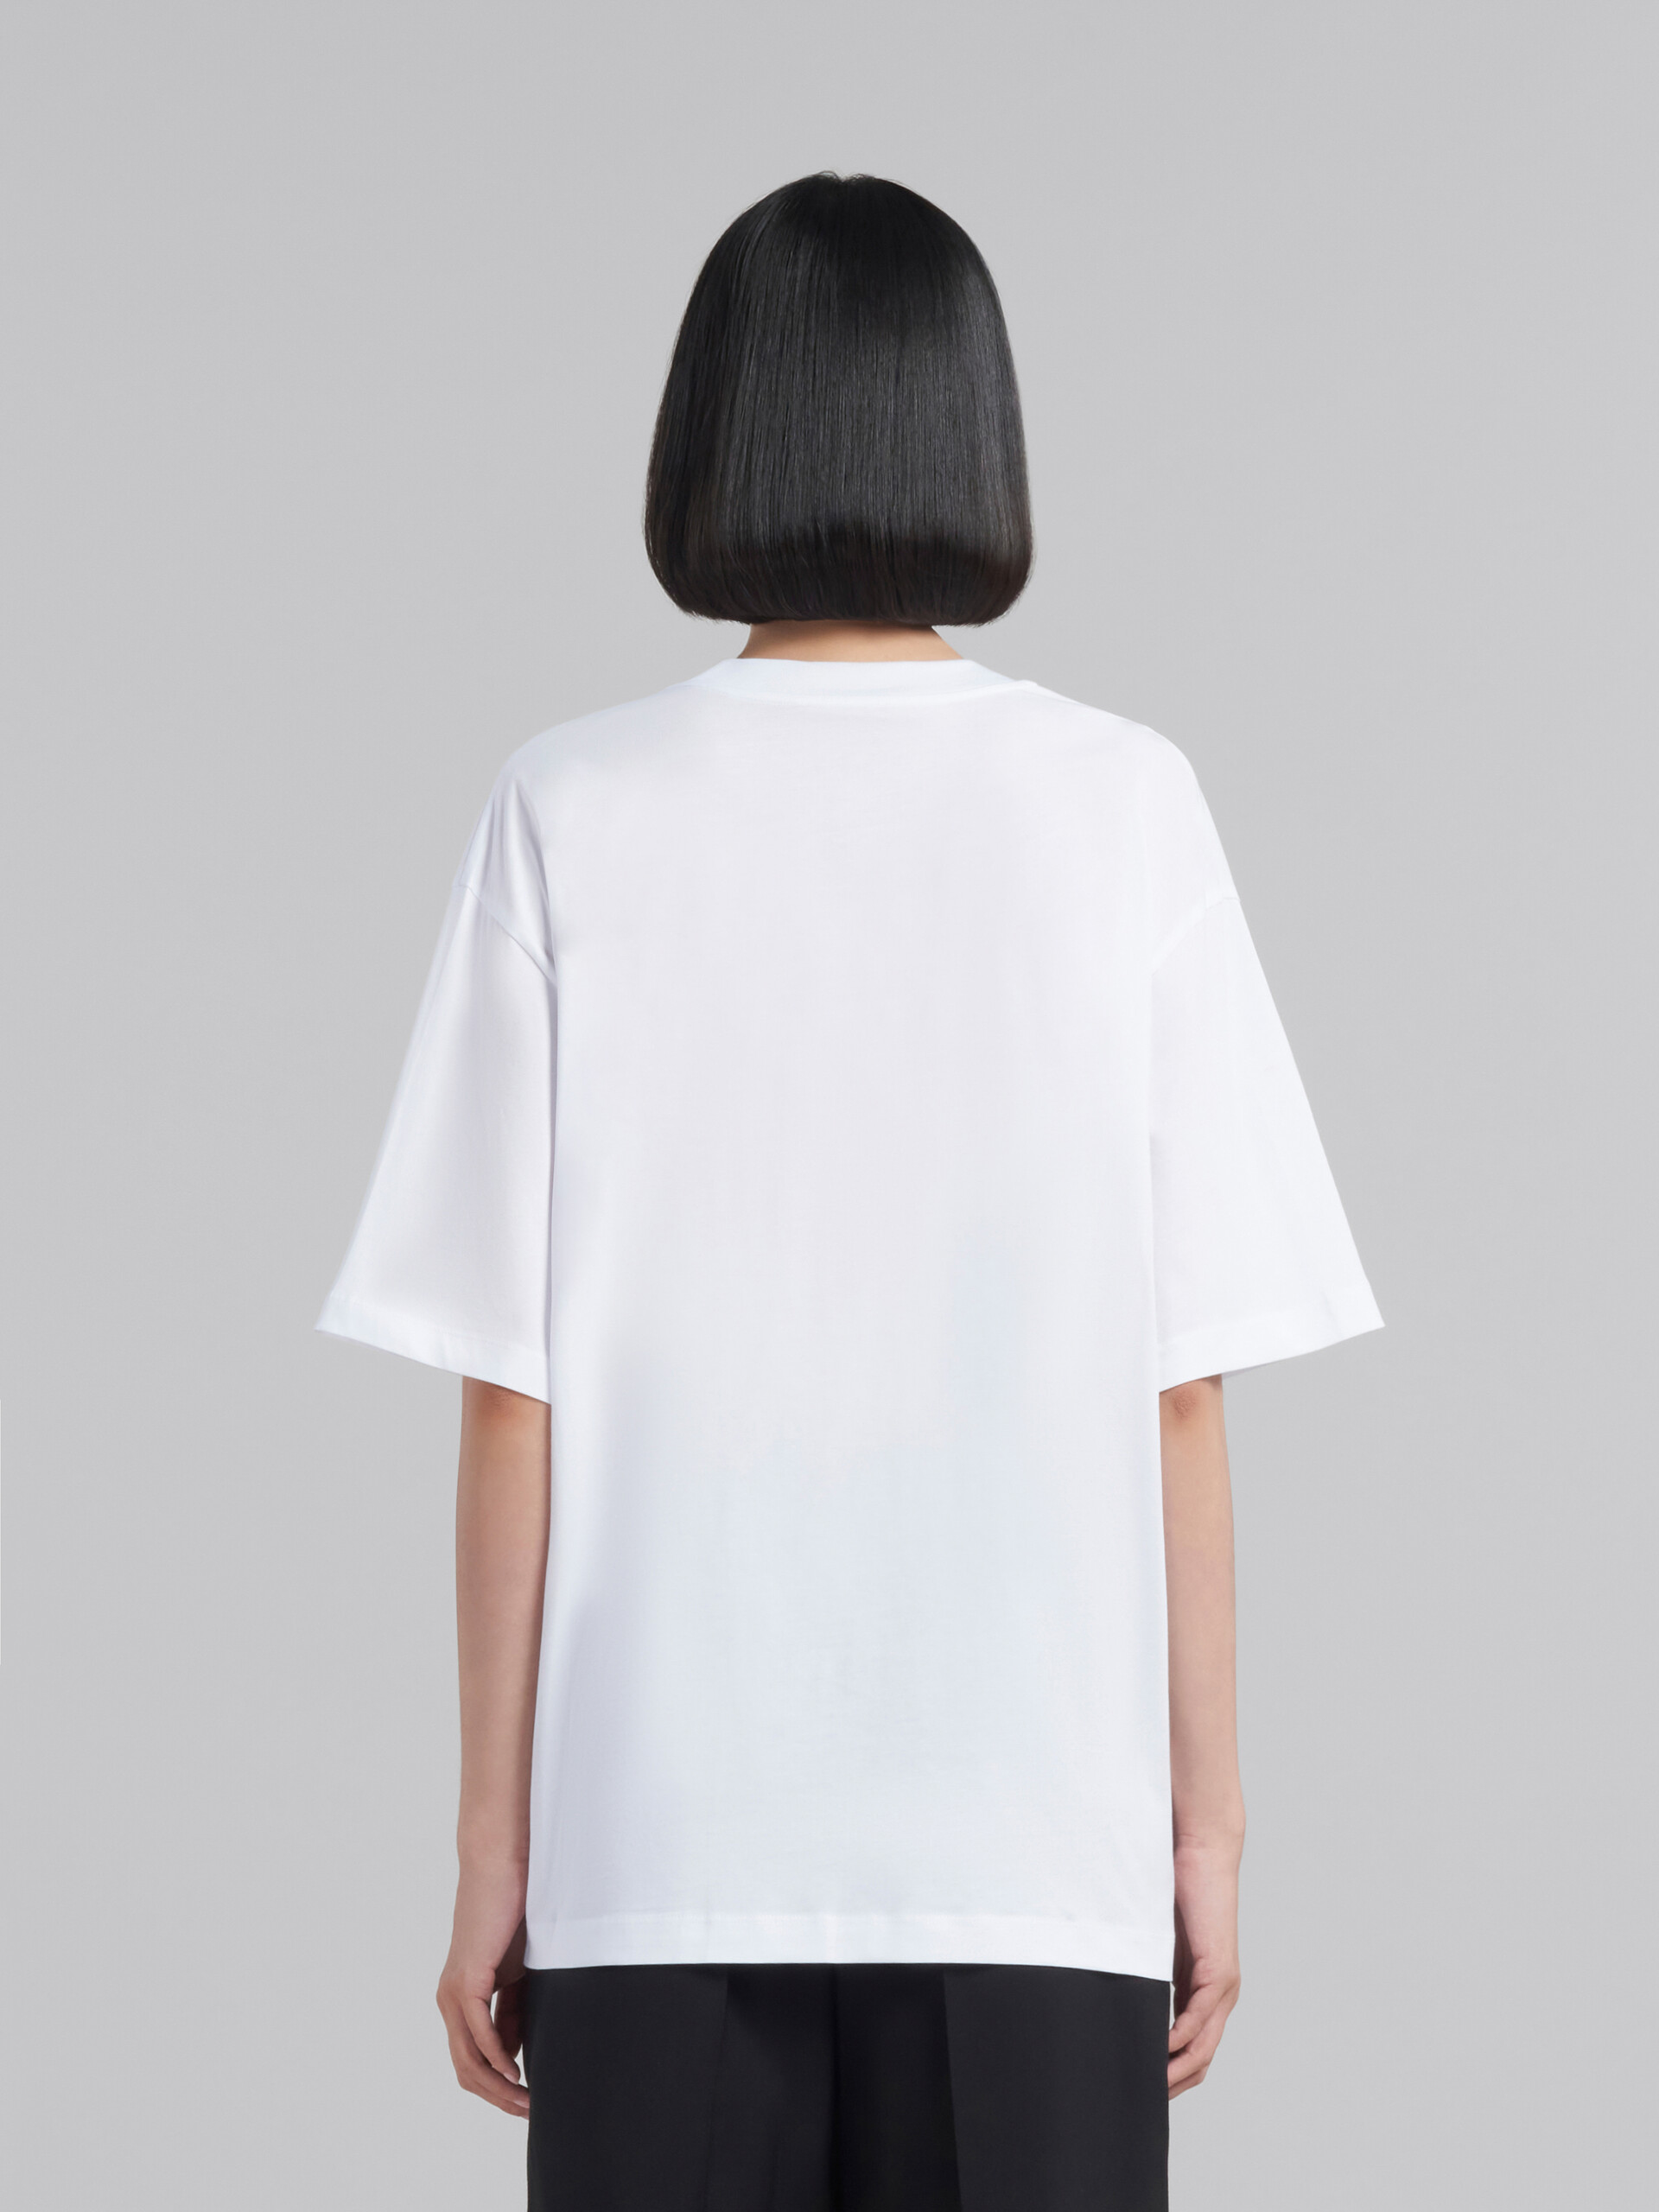 T-shirt in jersey organico stampa logo bianco - T-shirt - Image 3